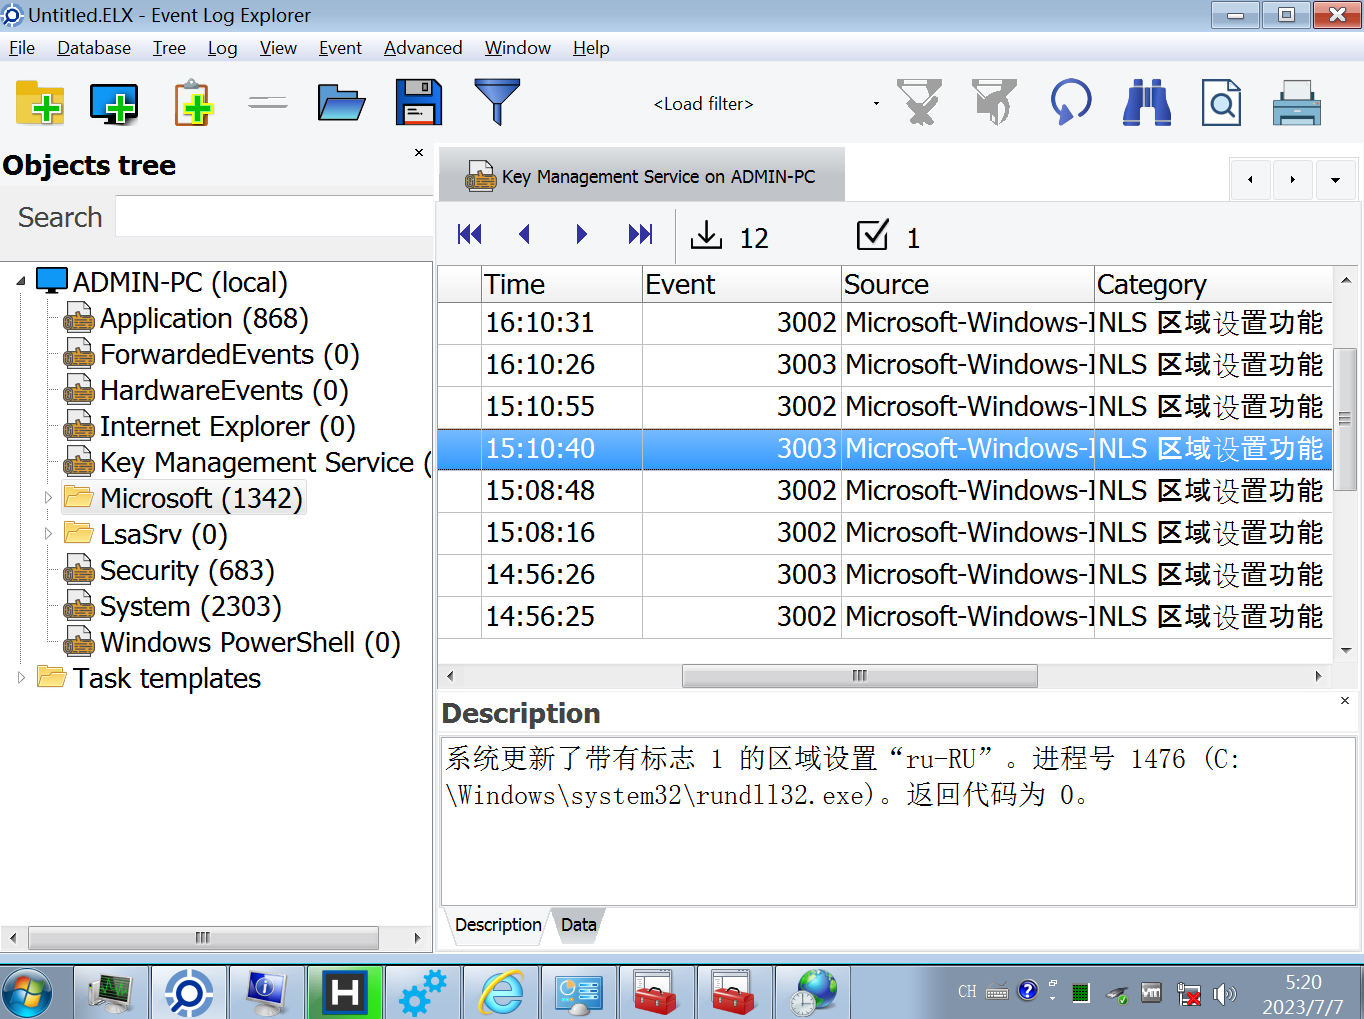 【匿名】Windows 7 Professional SP1 7601.24540 x86-x64 ZH-CN SM